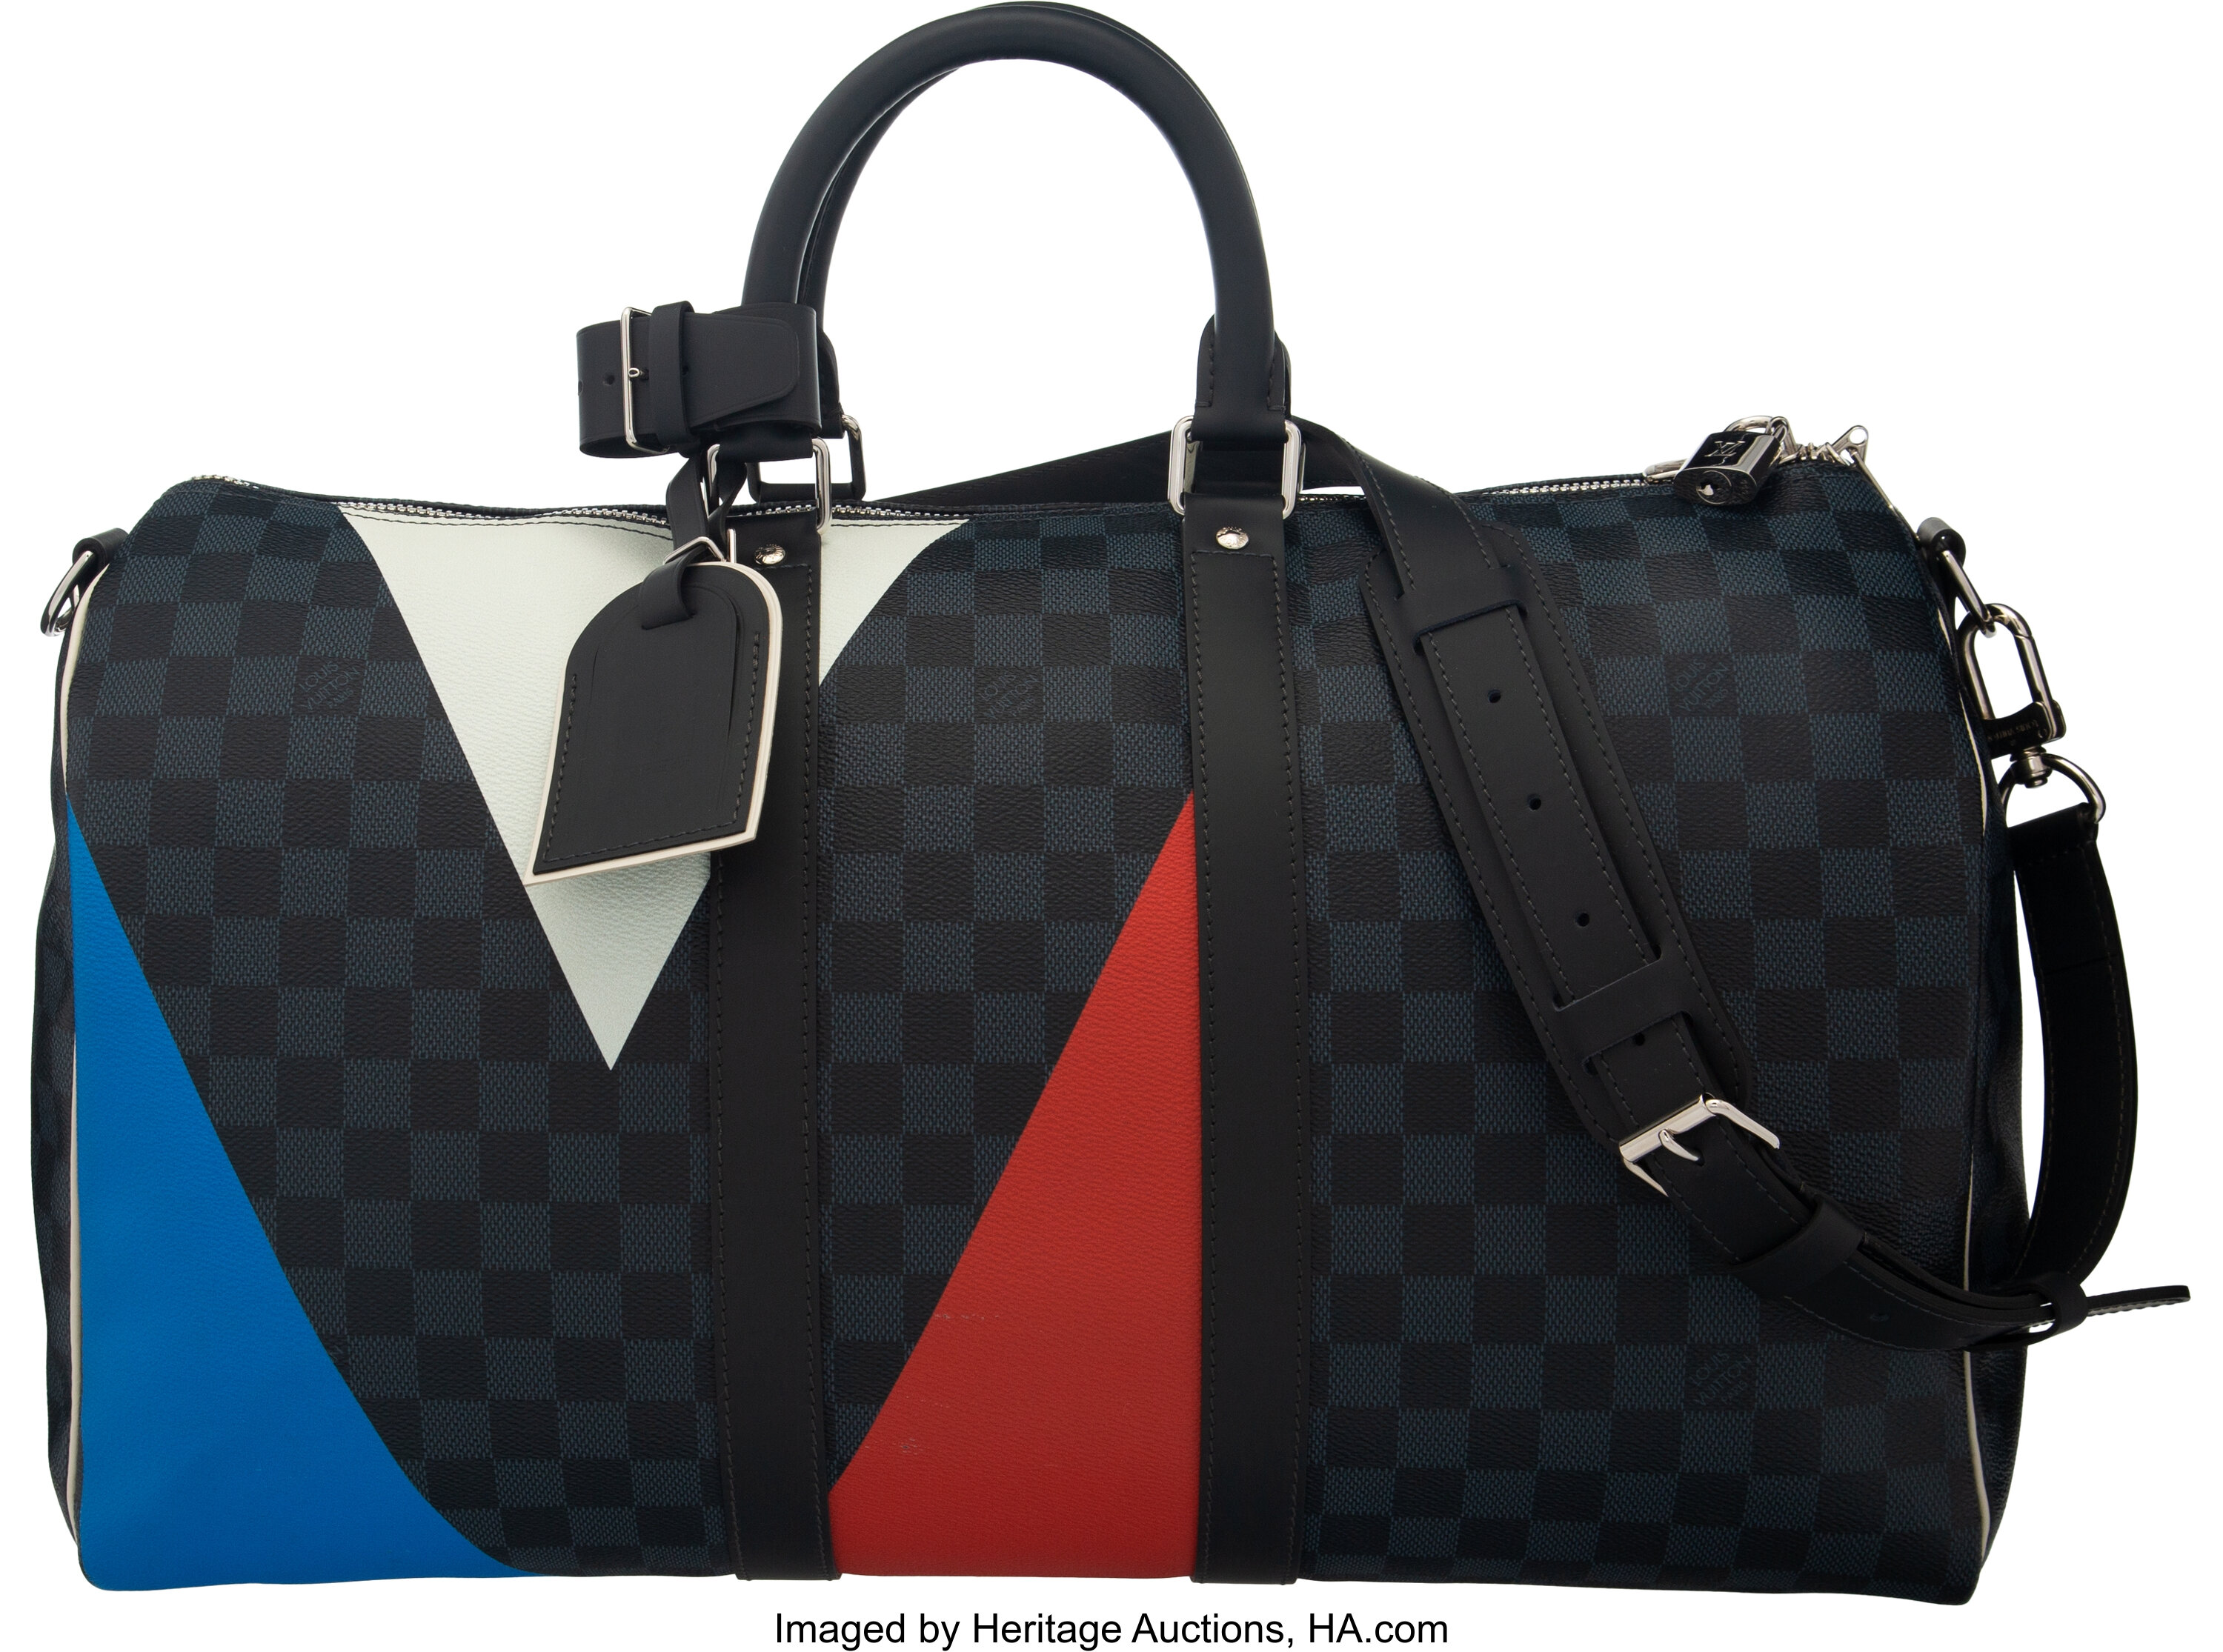 Sold at Auction: LOUIS VUITTON - Damier Travel bag